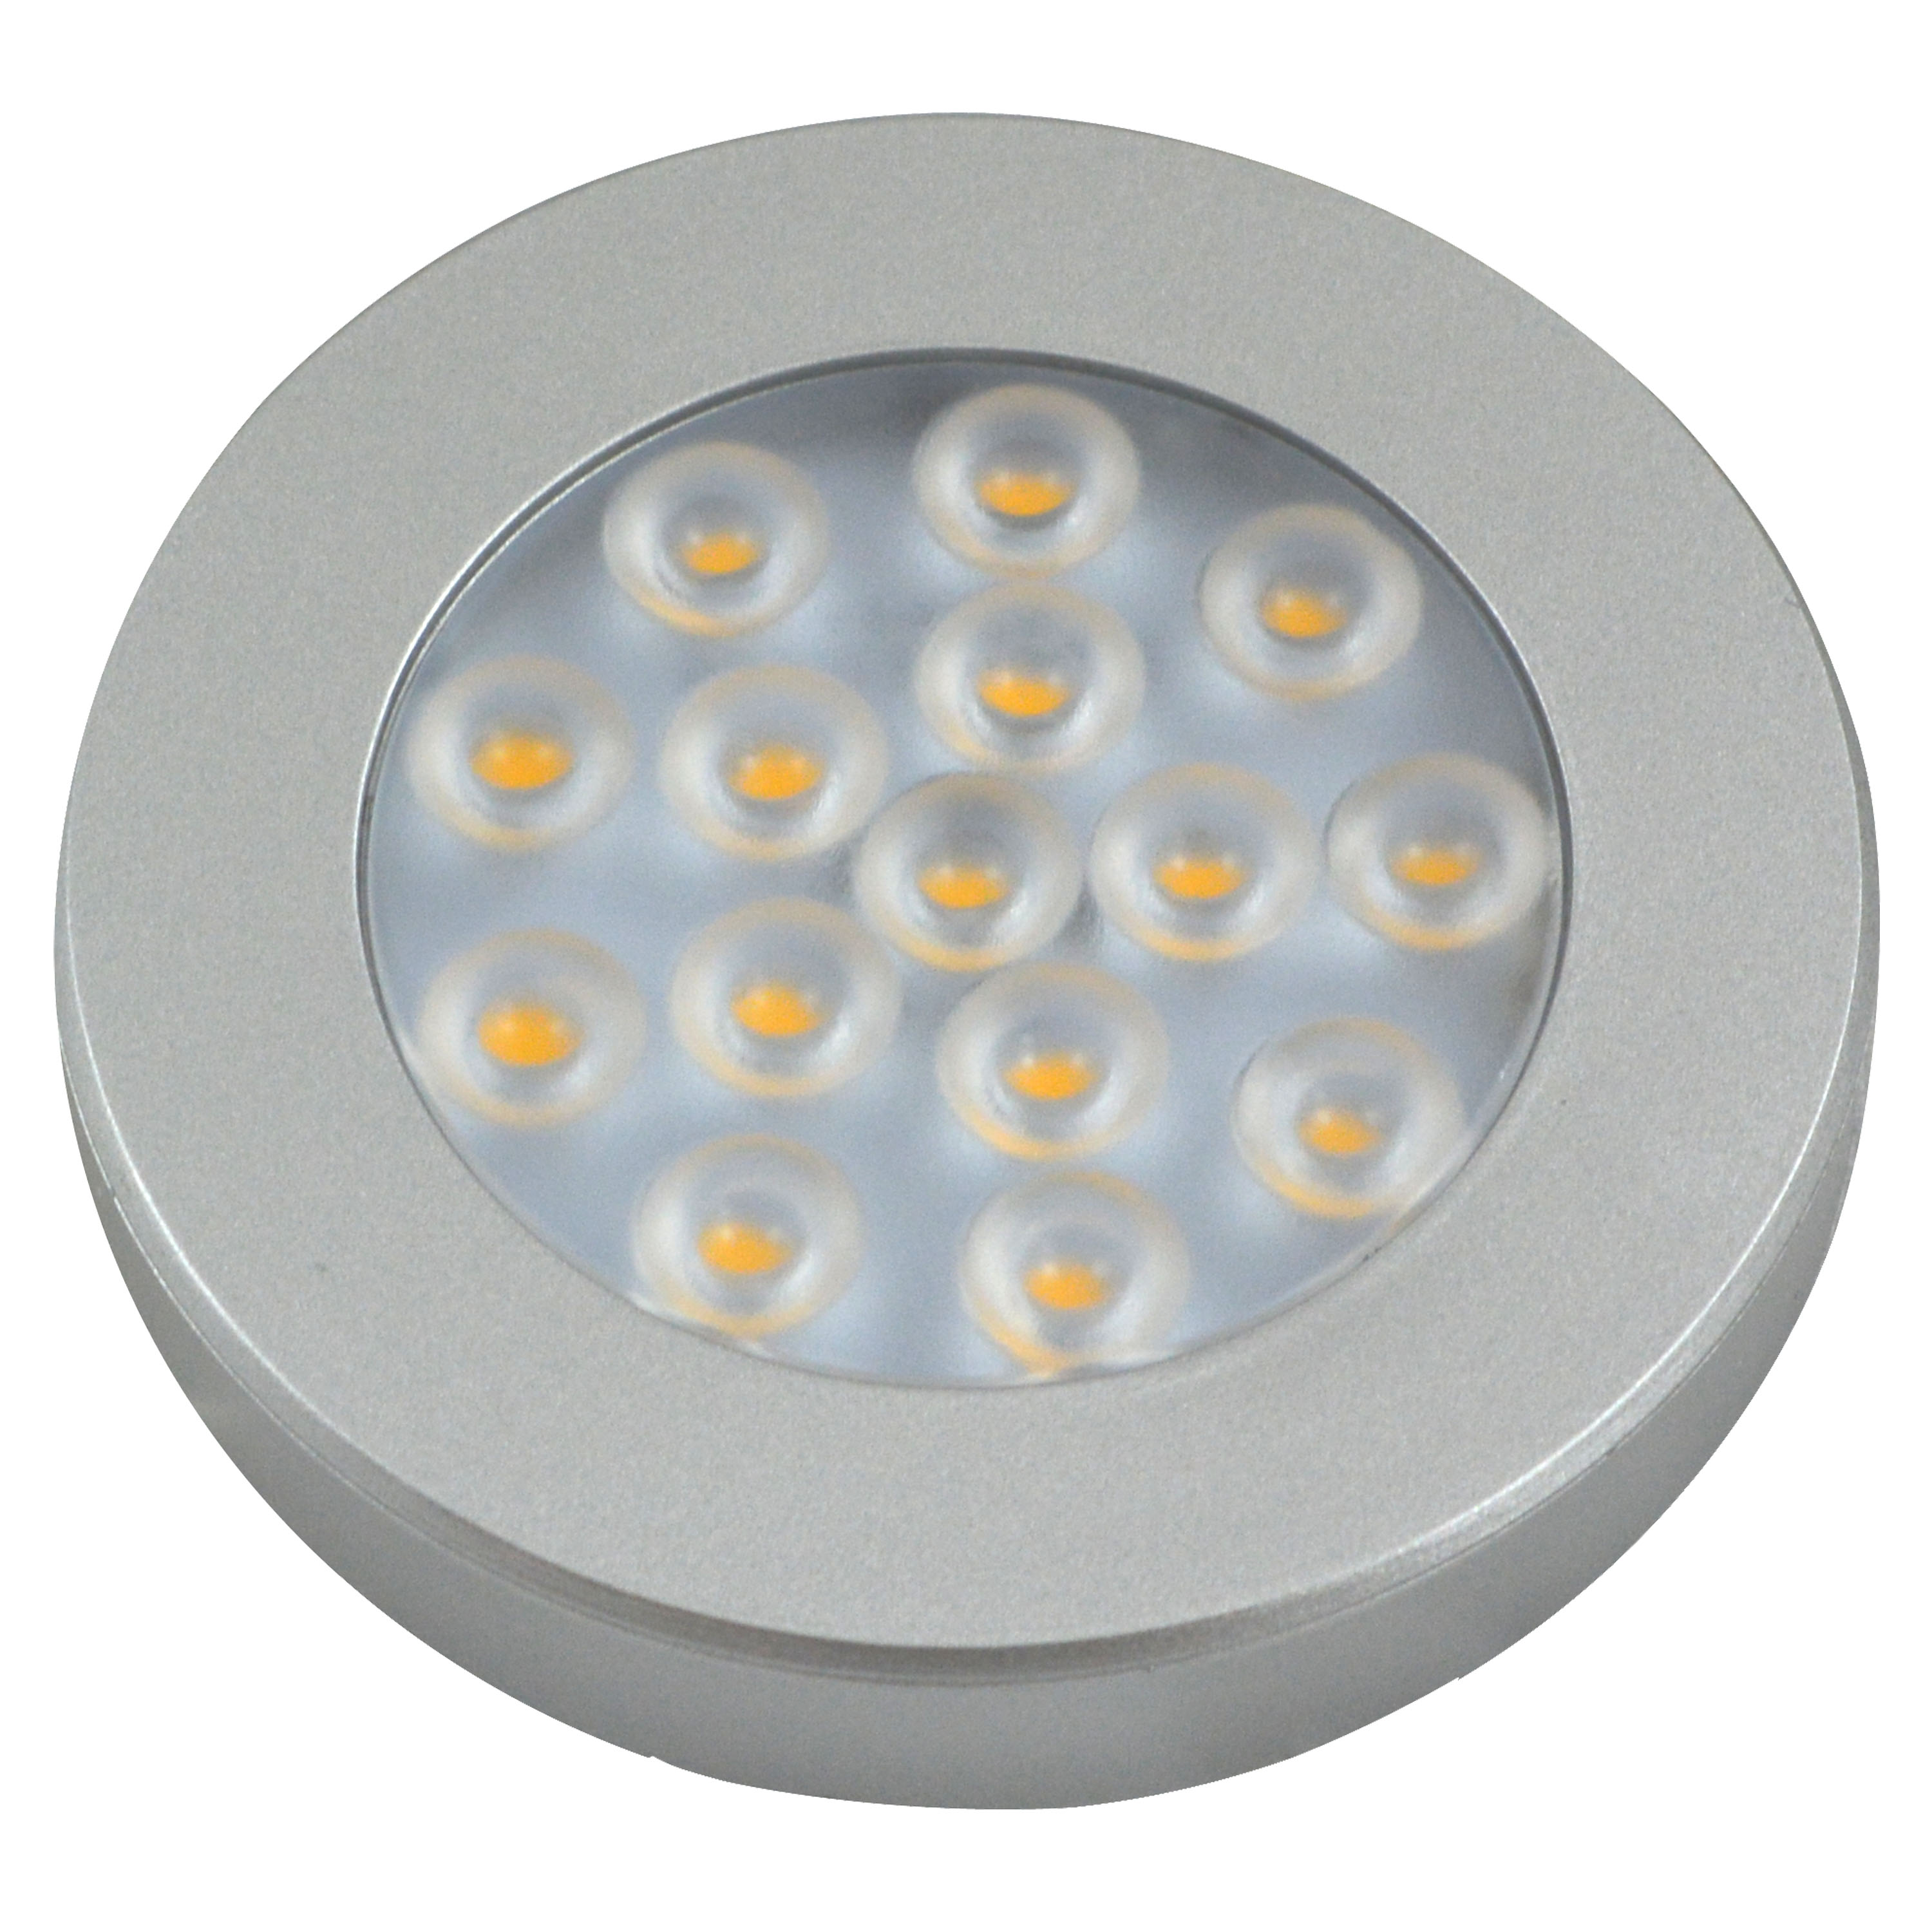 Indoor LED under cabinet light-Lumiland